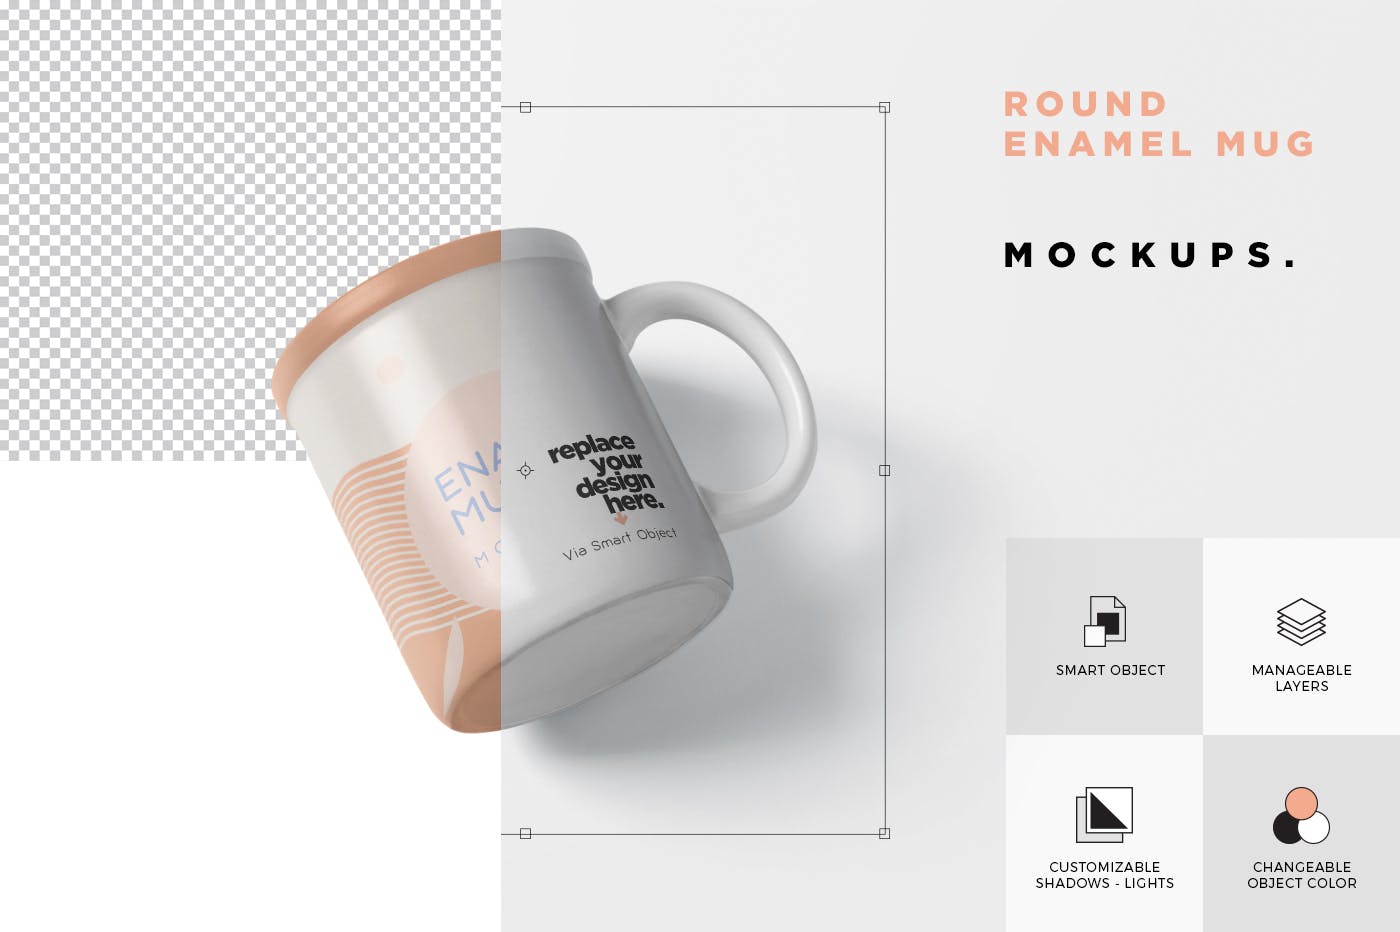 带把手圆形搪瓷杯马克杯图案设计16设计网精选 Round Enamel Mug Mockup With Handle插图(5)